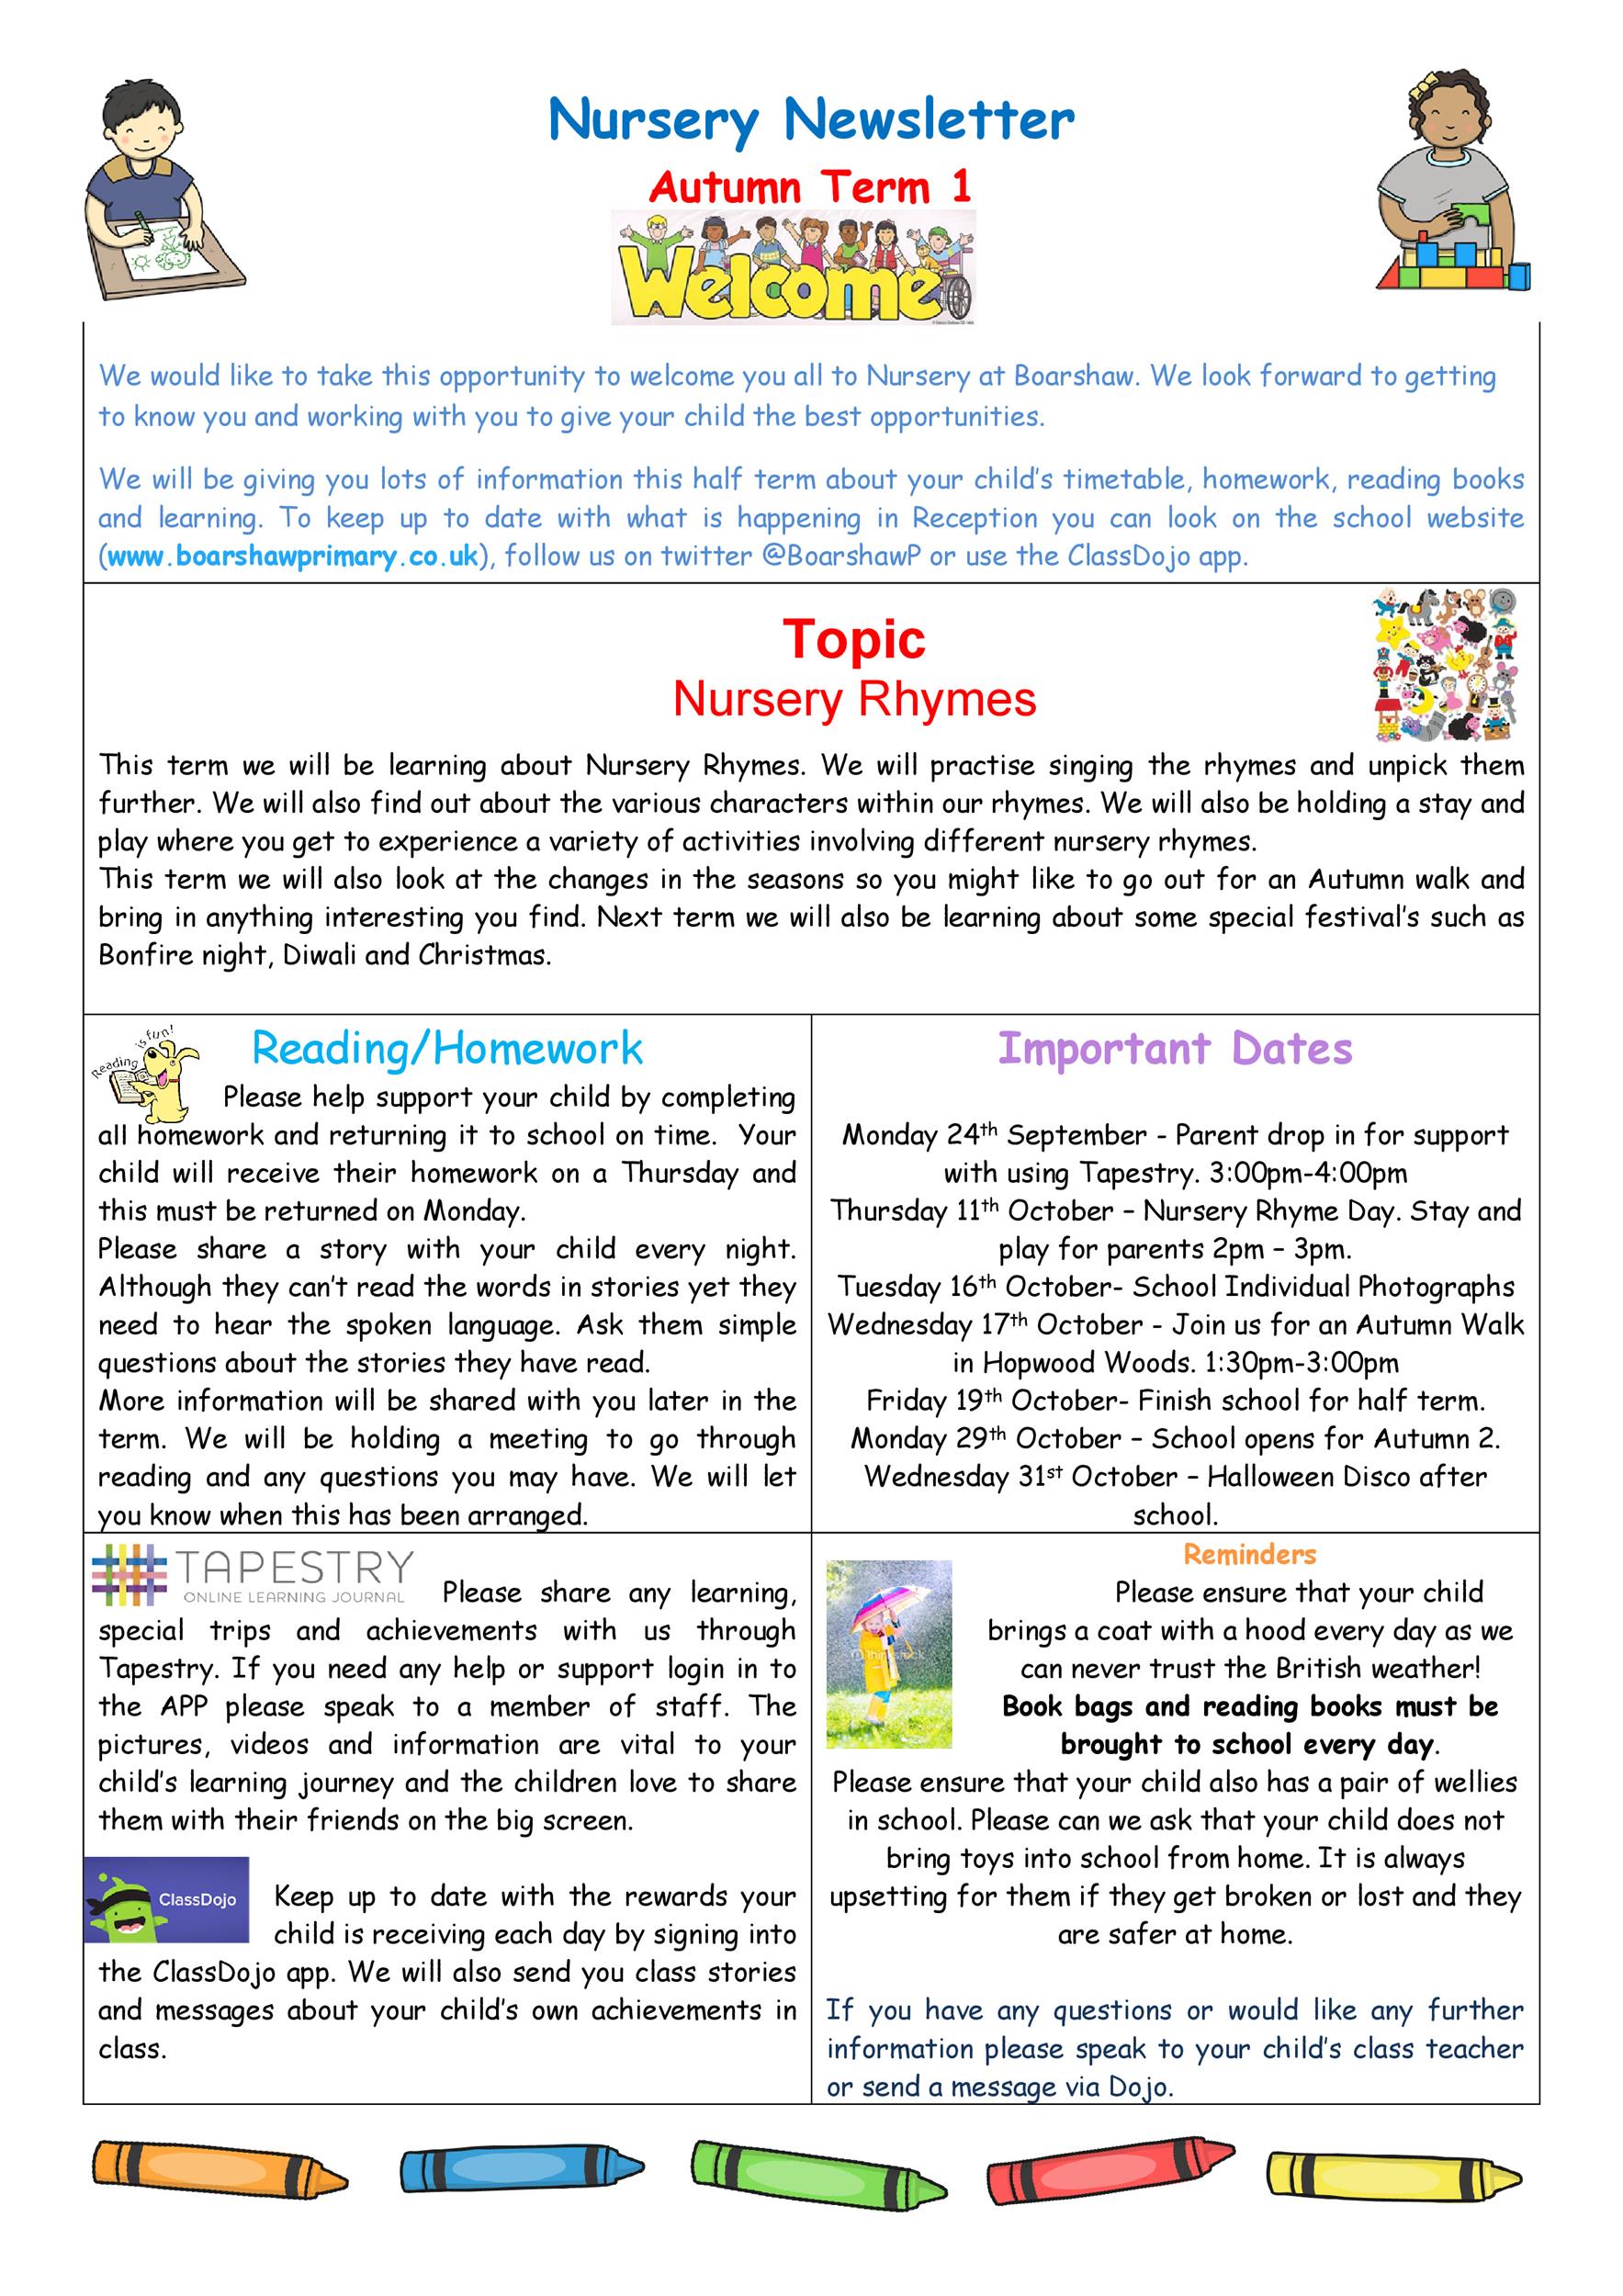 50 Creative Preschool Newsletter Templates ( Tips) ᐅ TemplateLab